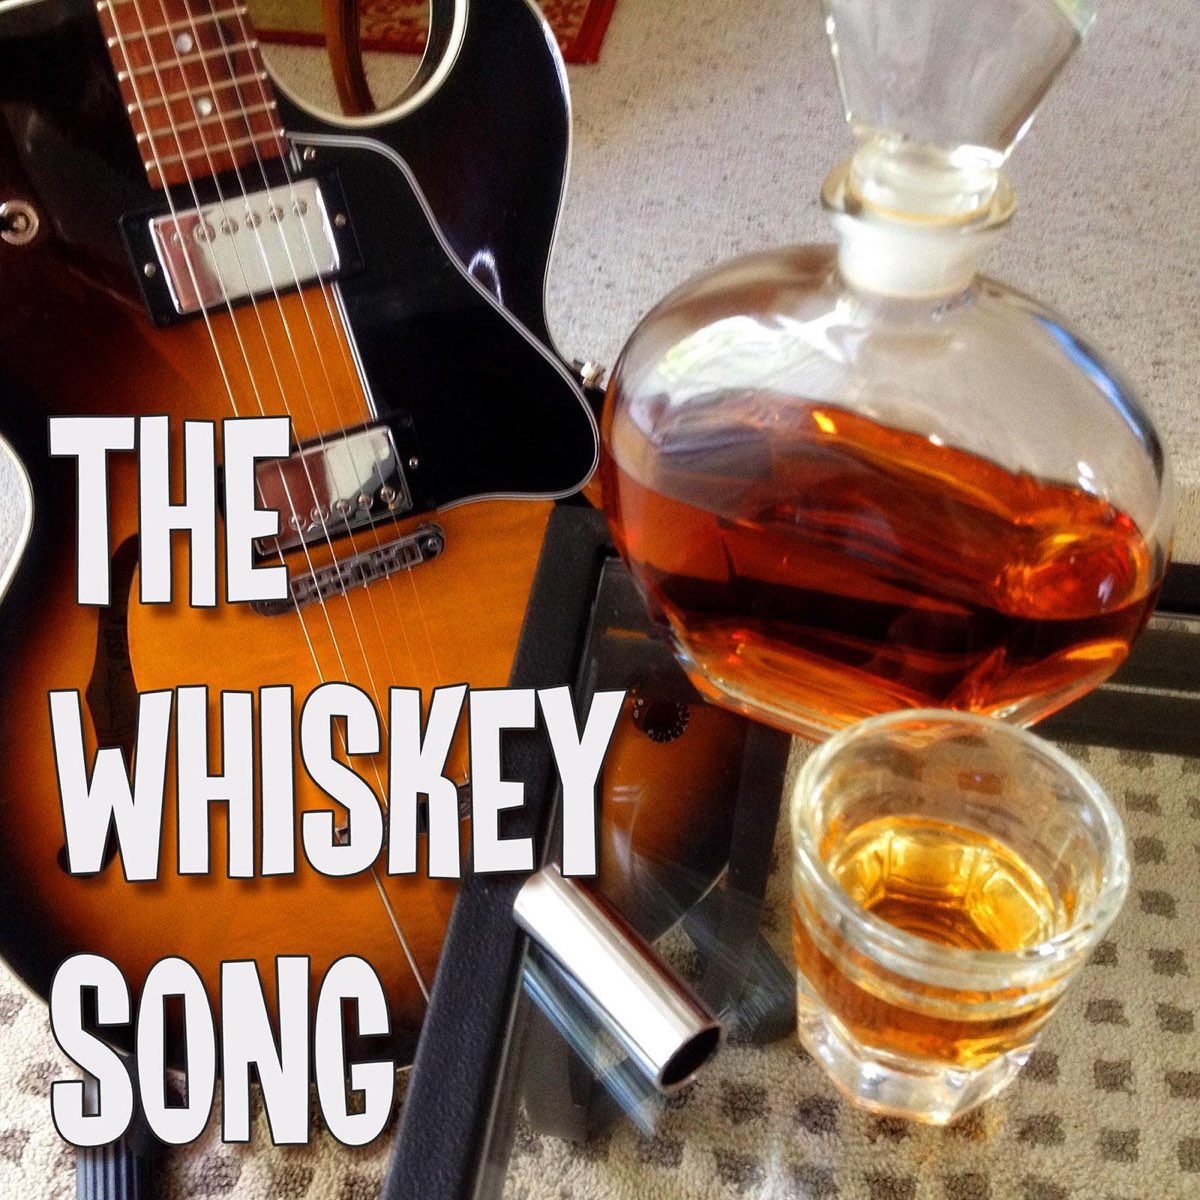 Музыка виски текила. Виски блюз. Пластинка Whiskey Blues. Виски блюз картинки. Картинка музыка виски блюз.